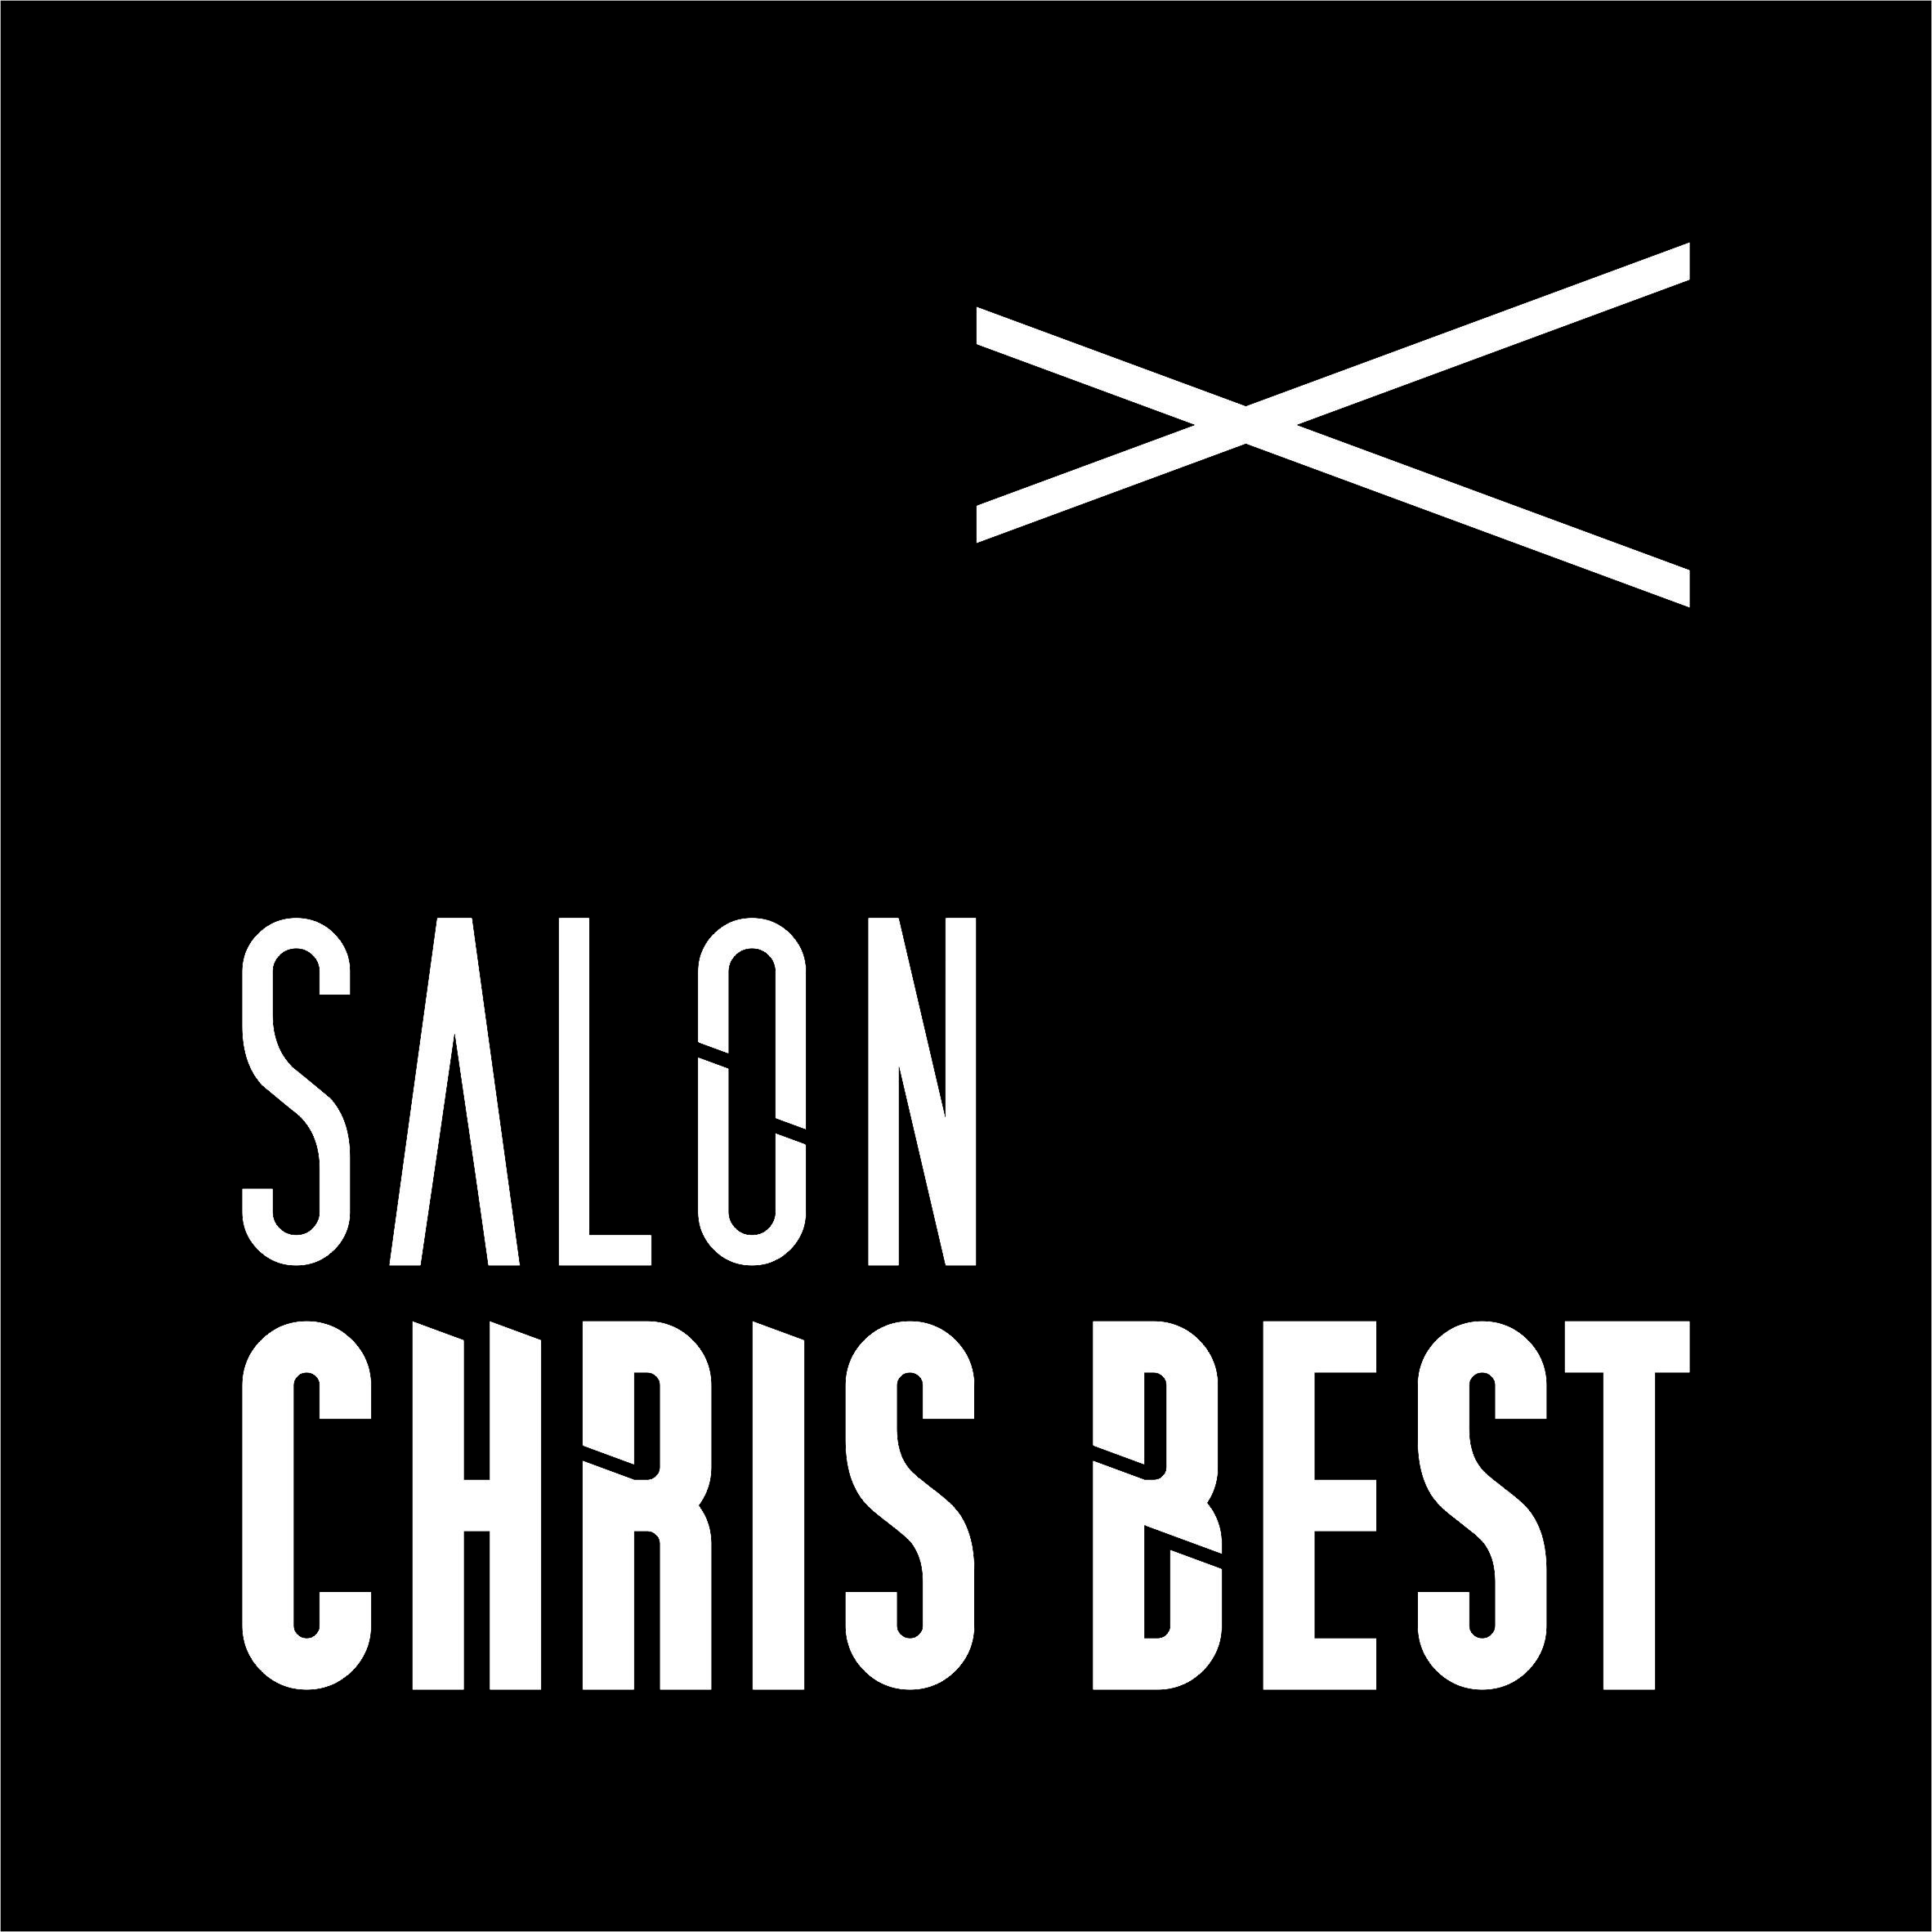 Salon Chris Best